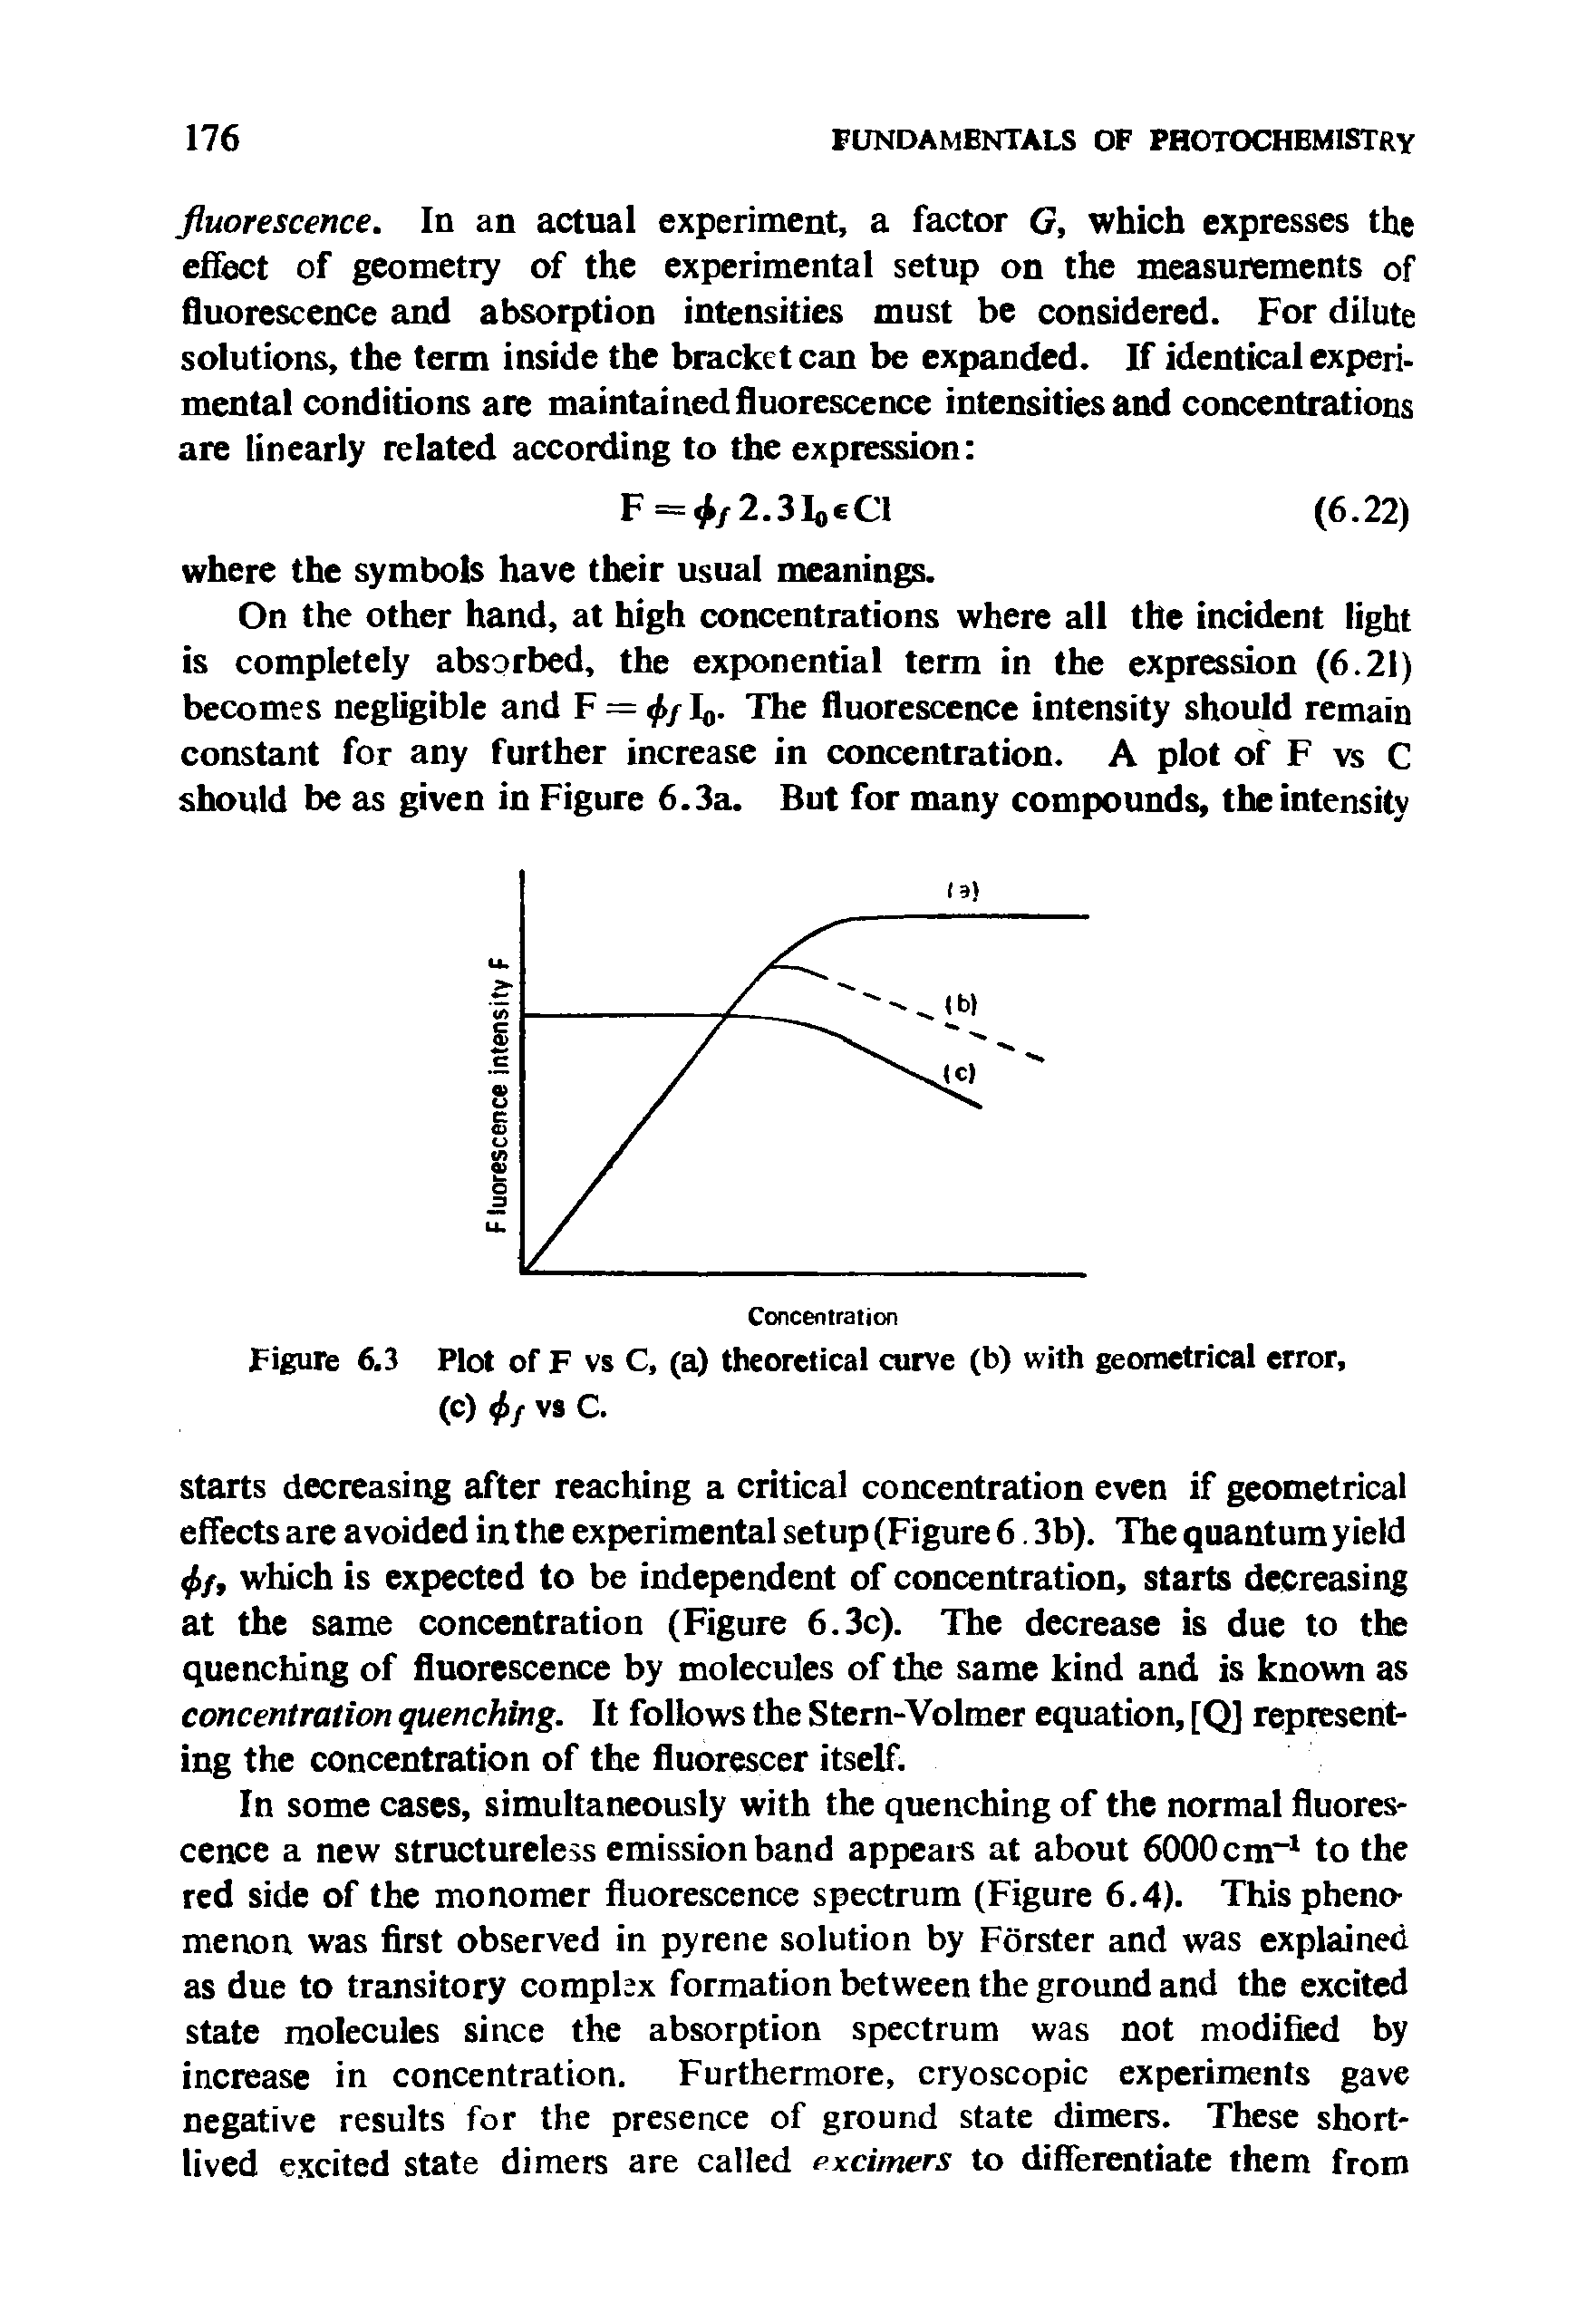 Figure 6.3 Plot of F vs C, (a) theoretical curve (b) with geometrical error,...